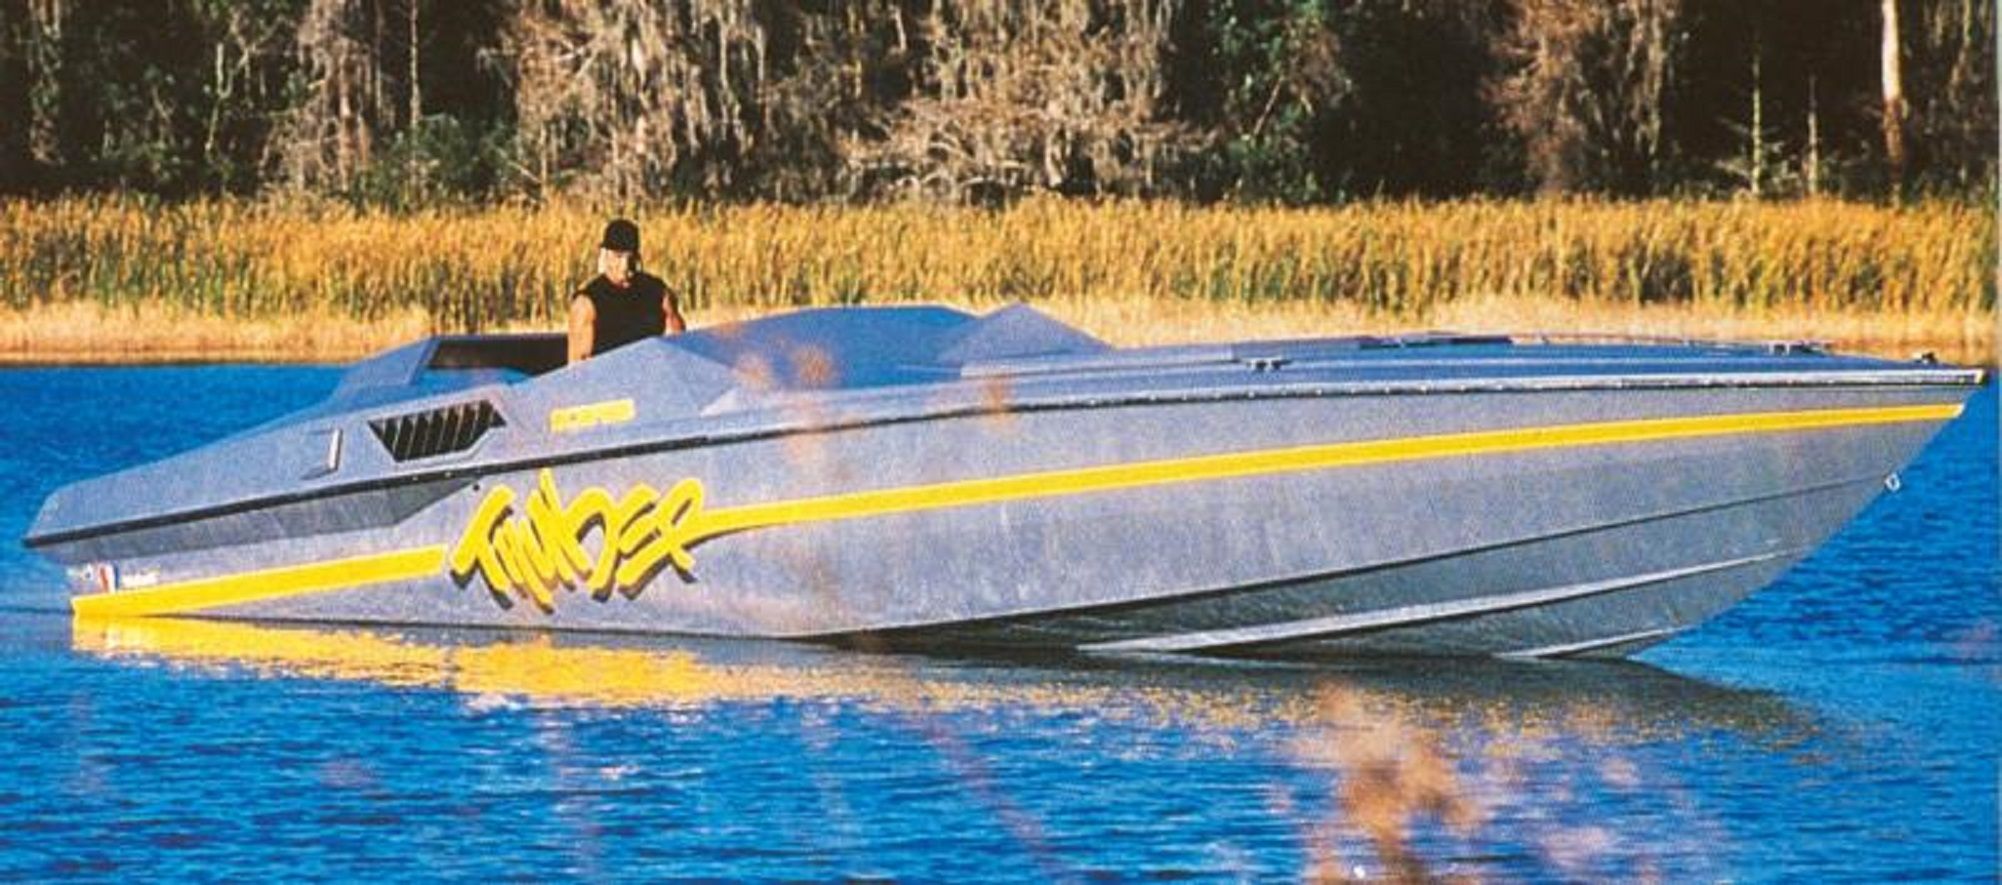 Hulk Hogan motor boat